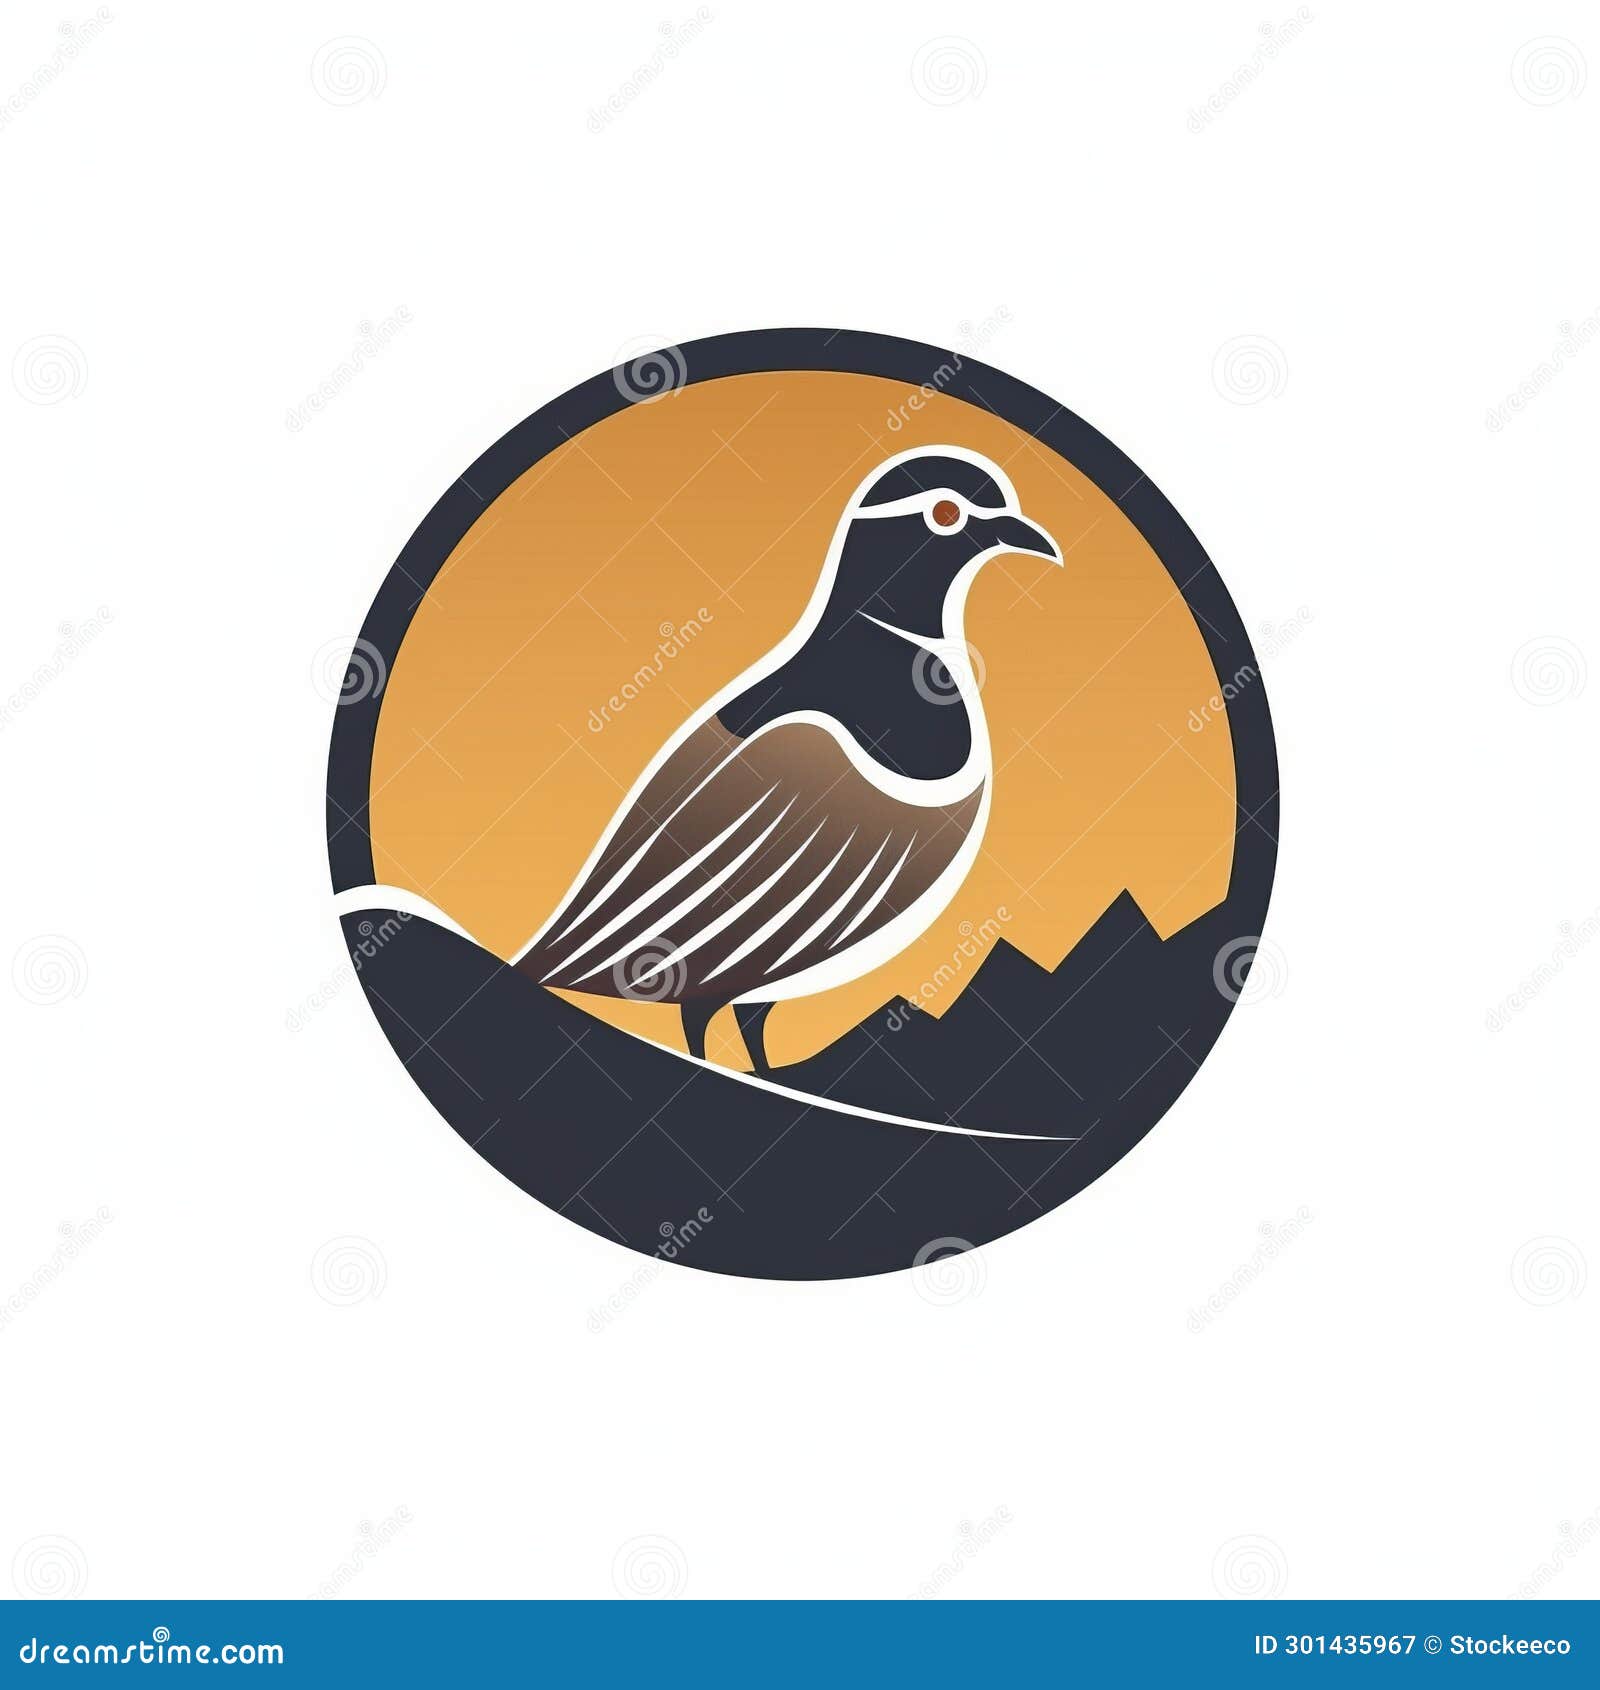 mountain animal logo  with accurate bird specimens